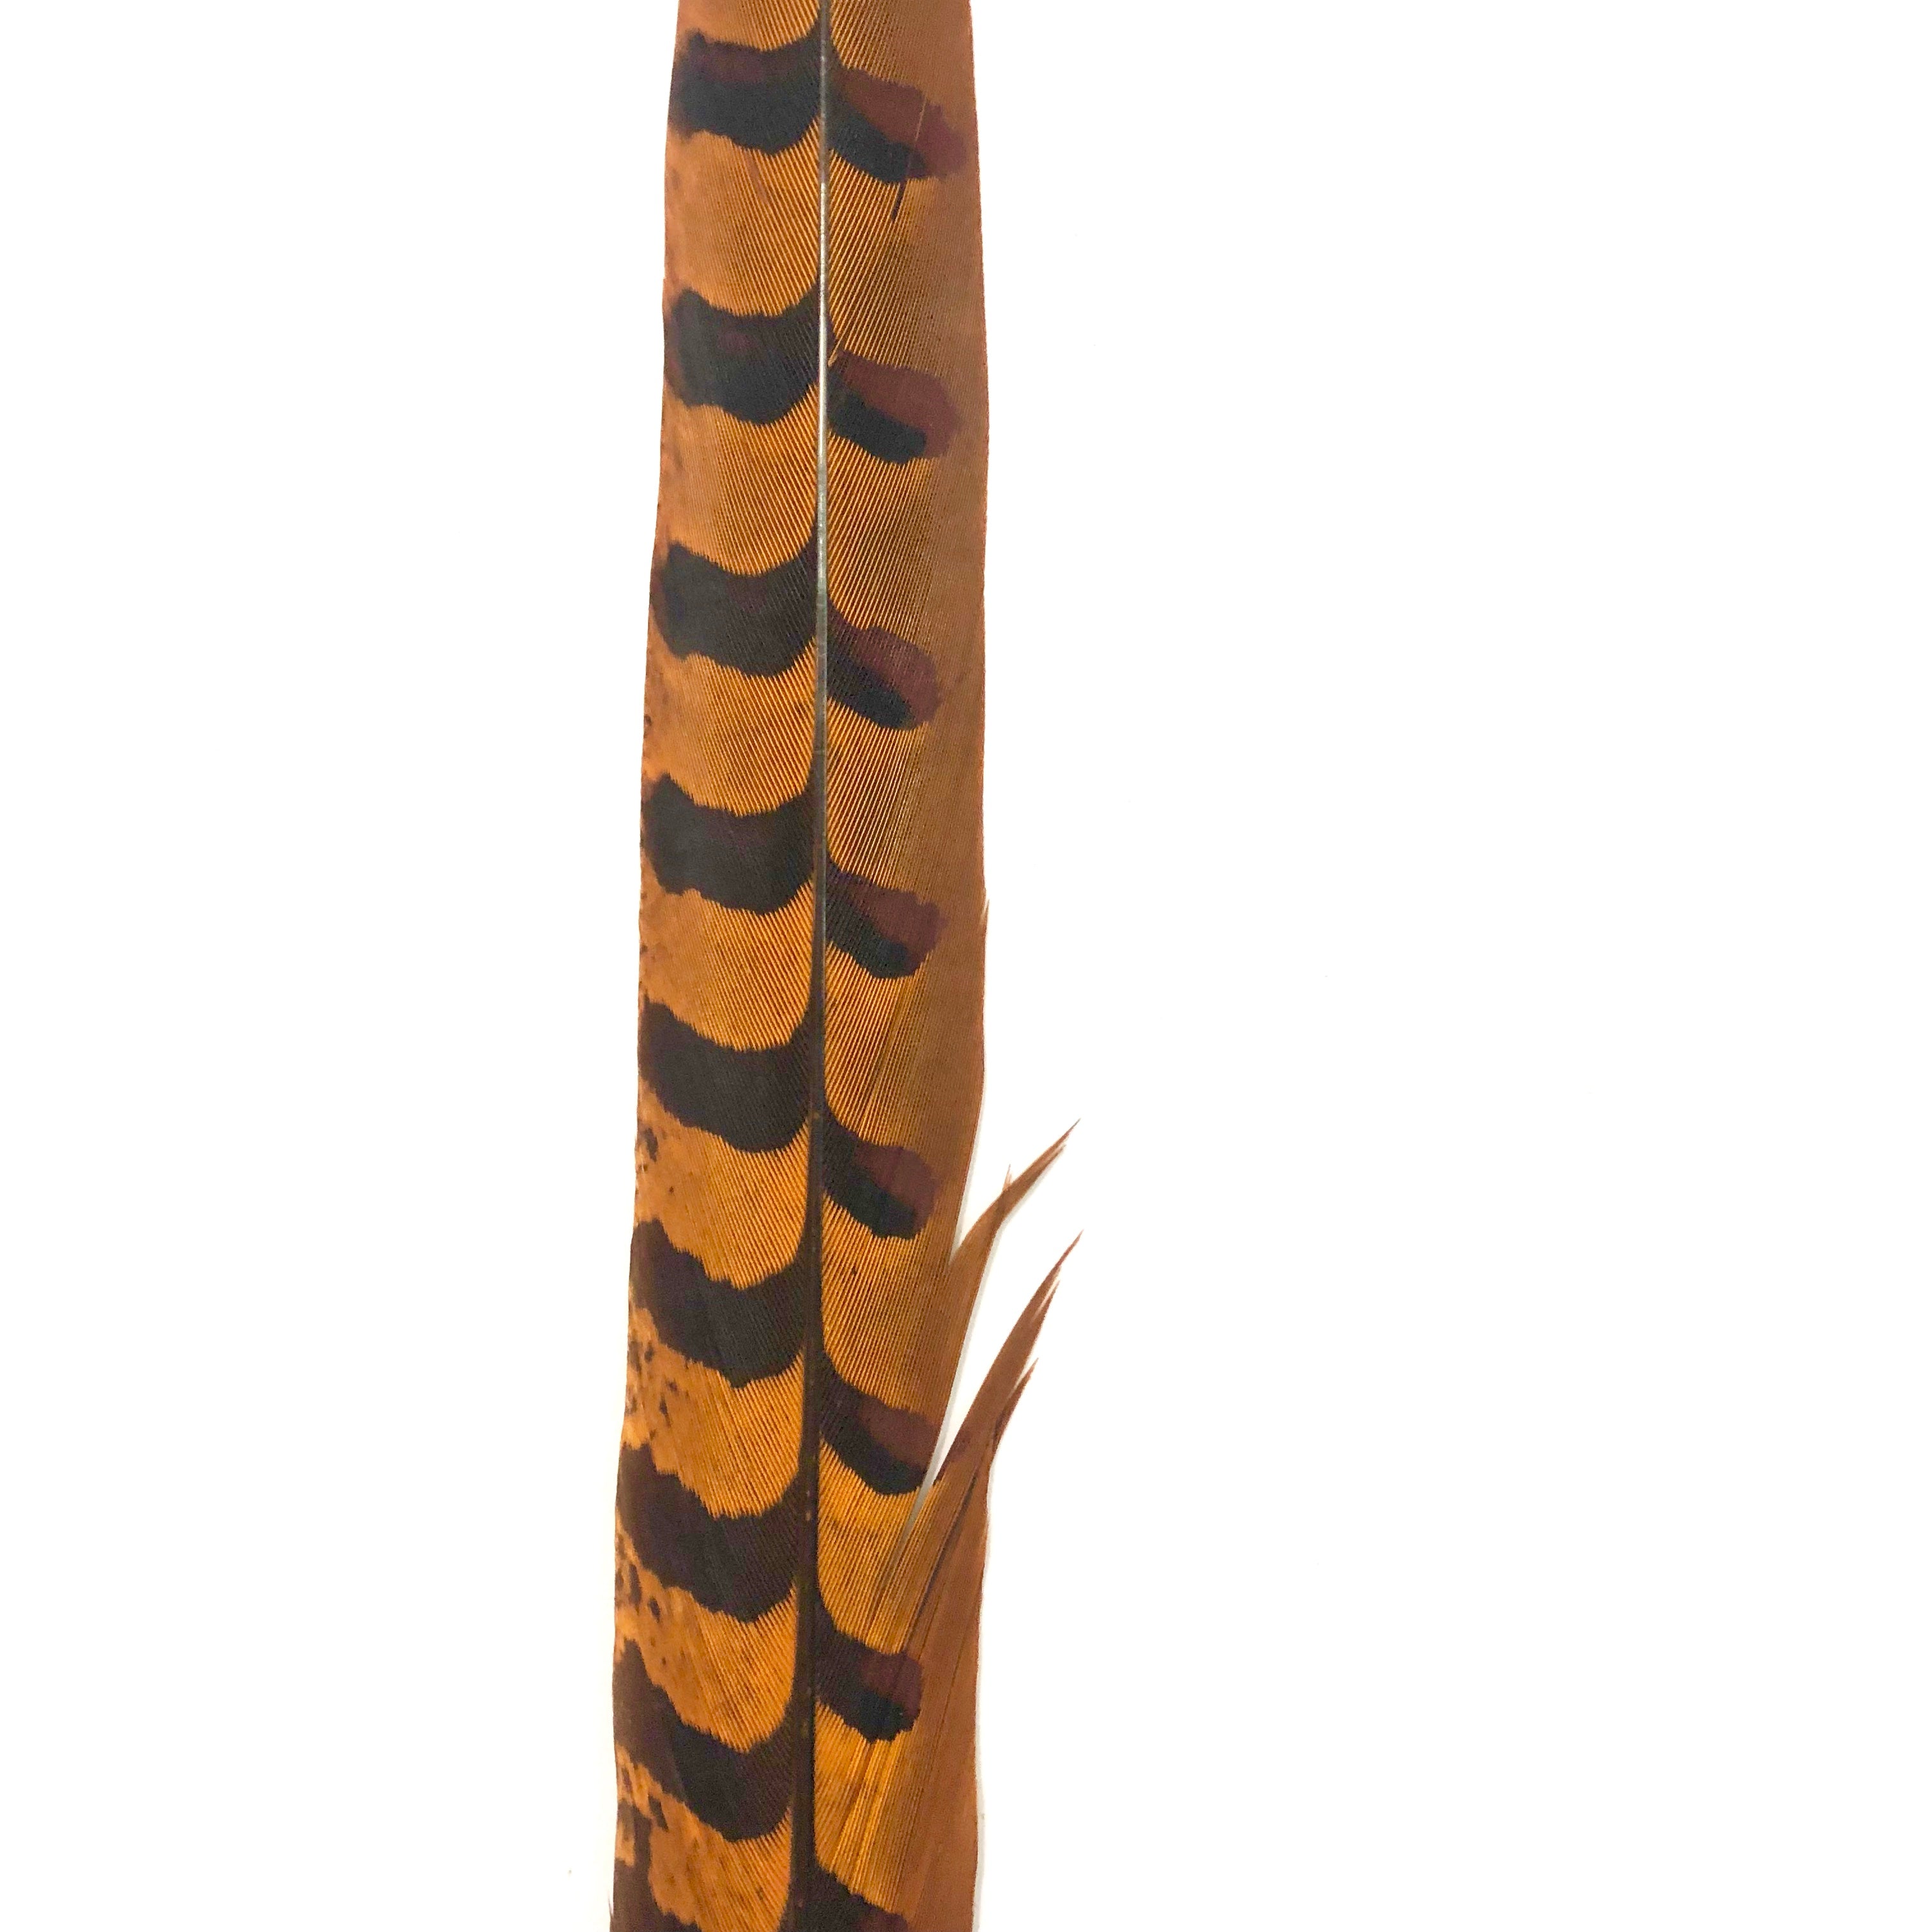 18" to 20" Reeves Pheasant Tail Feather - Orange